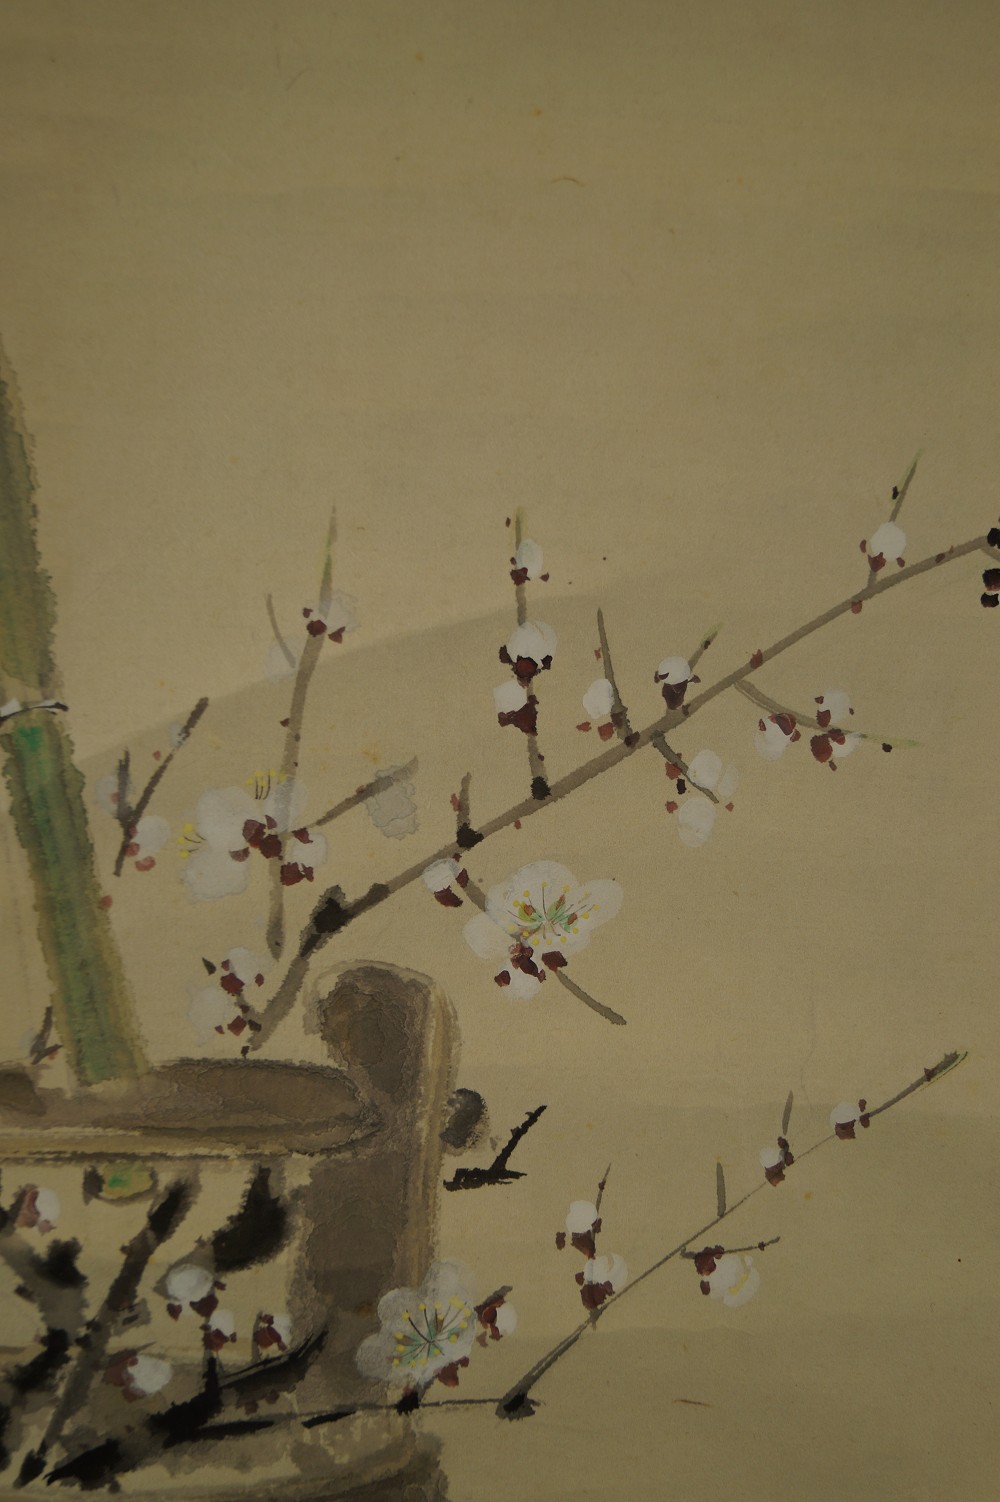 Pflaumenblüten - Japanisches Rollbild (Kakejiku, Kakemono)